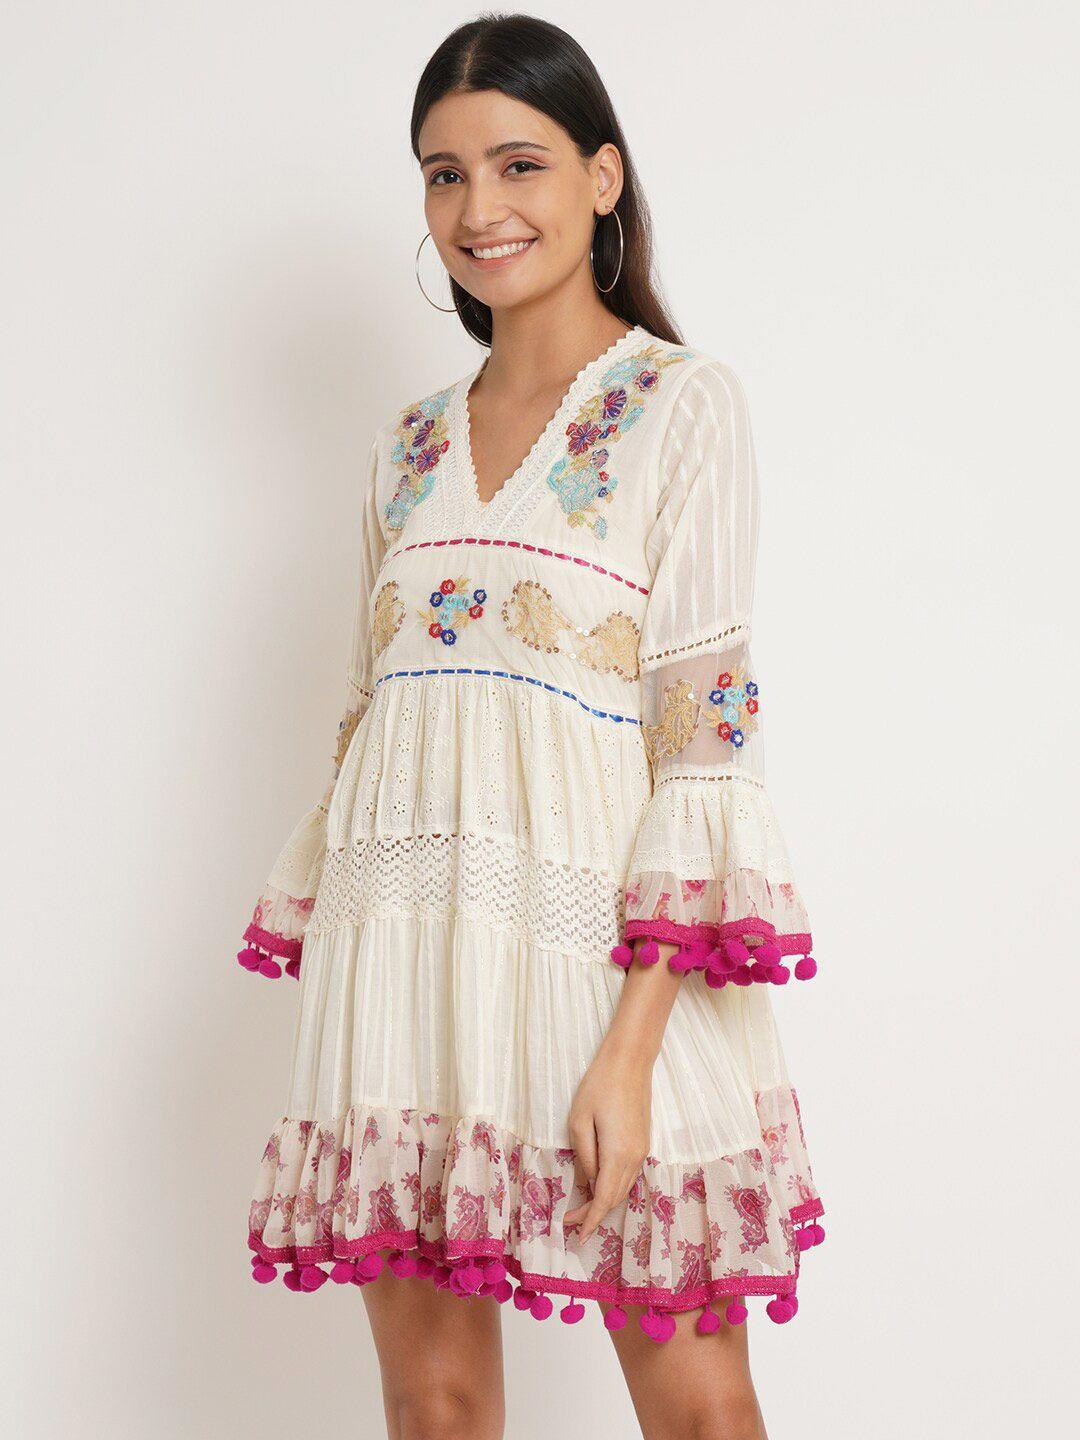 ix-impression-pink-&-beige-floral-embroidered-cotton-dress